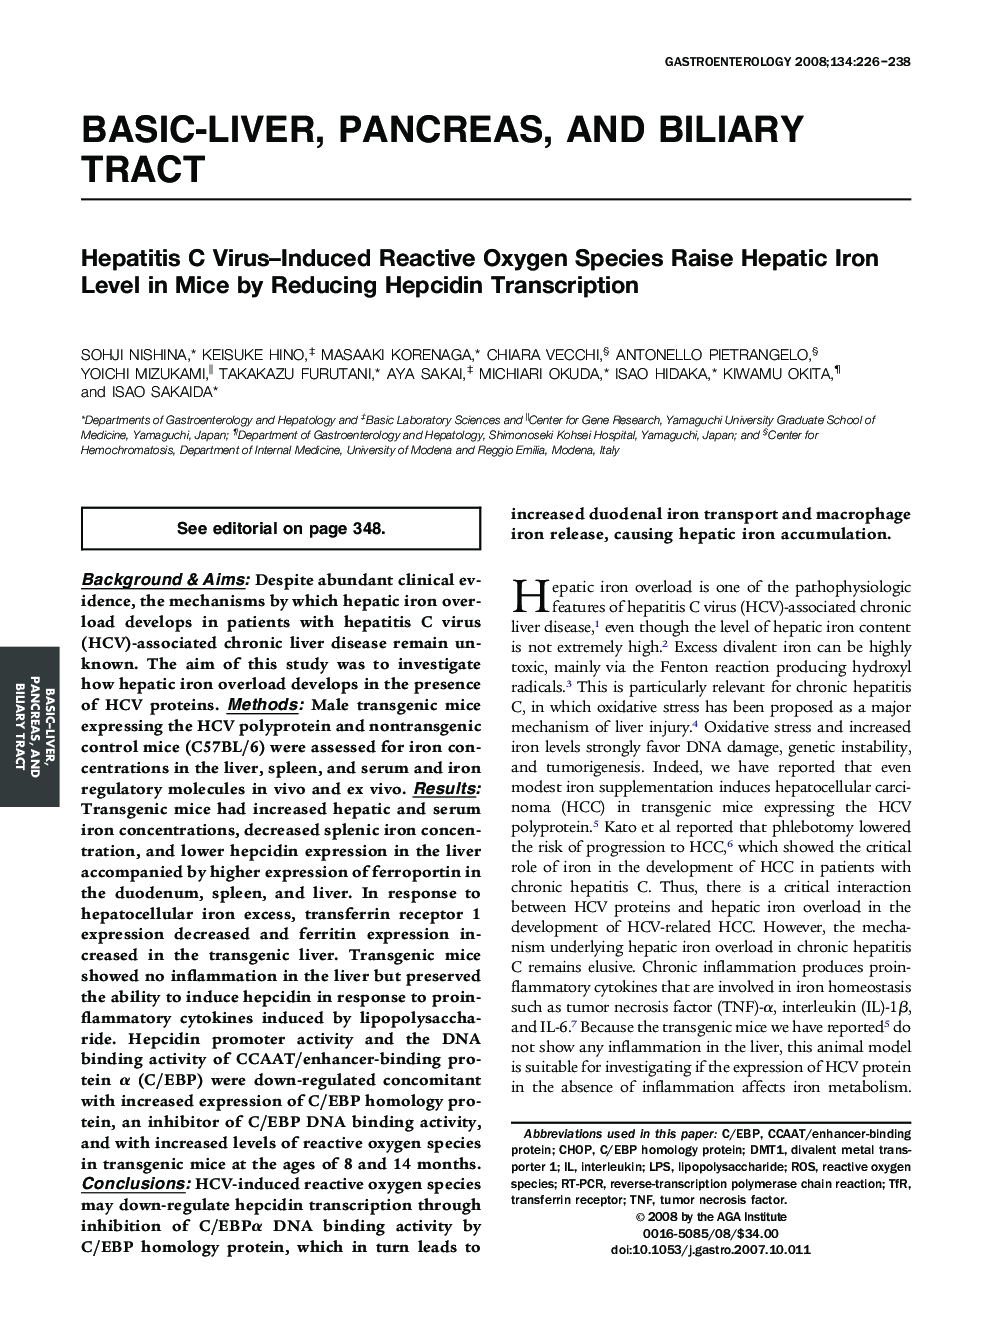 Hepatitis C Virus–Induced Reactive Oxygen Species Raise Hepatic Iron Level in Mice by Reducing Hepcidin Transcription 